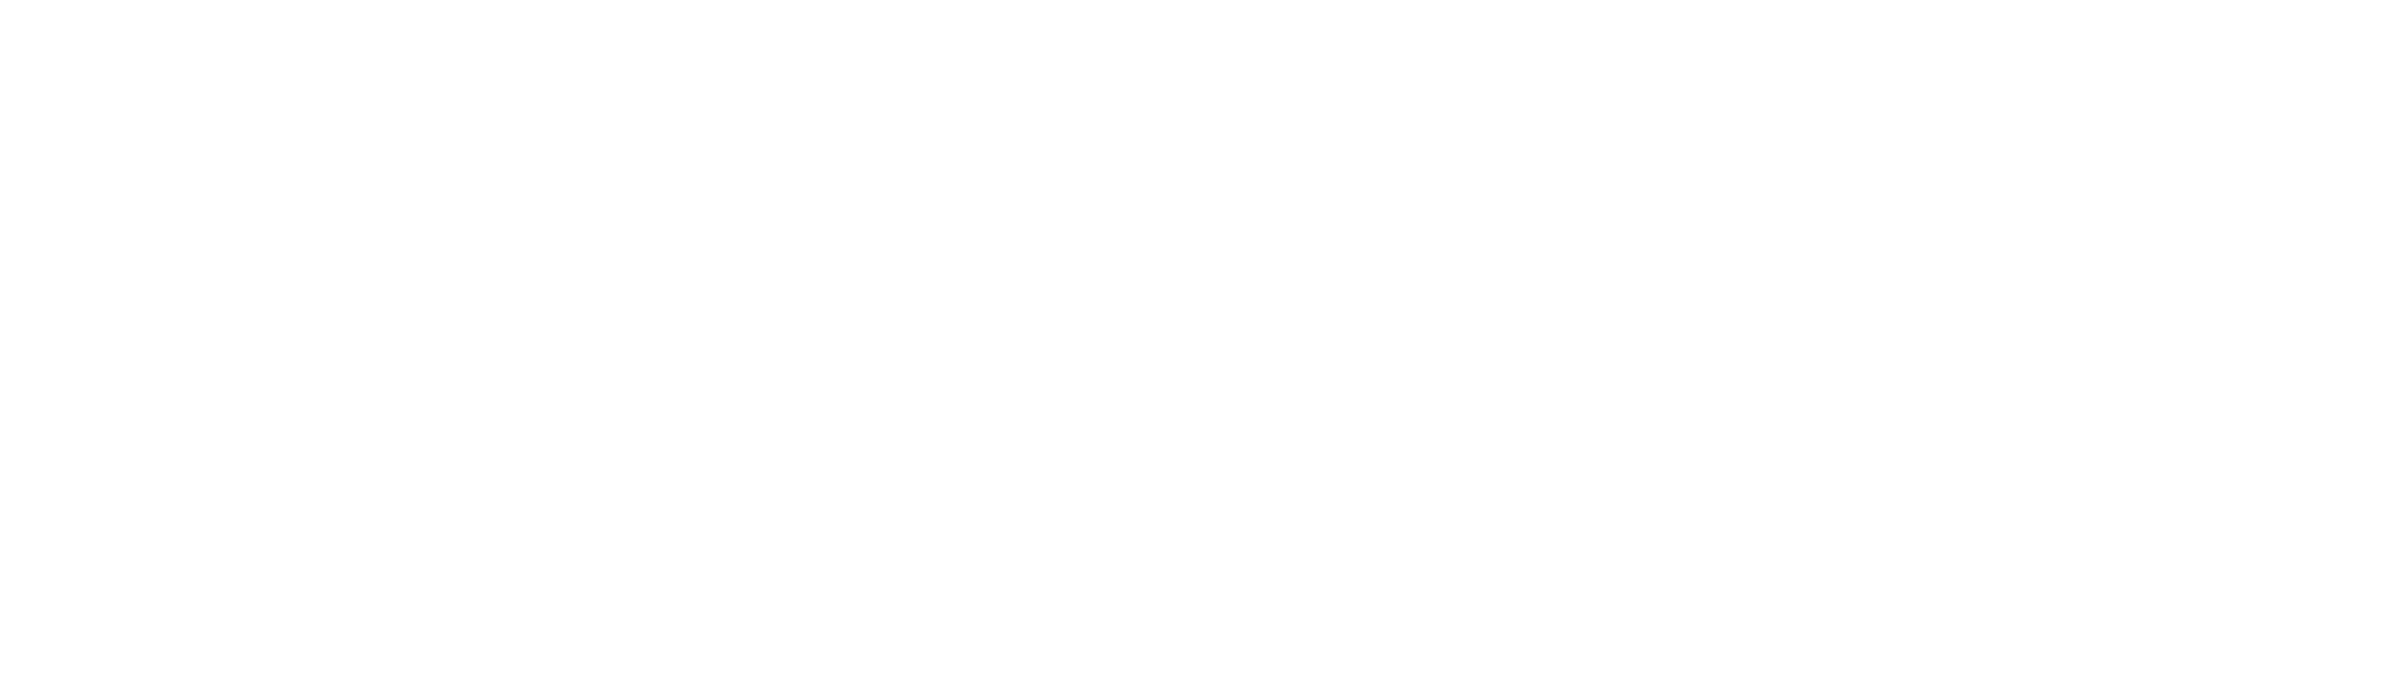 Zerto Logo